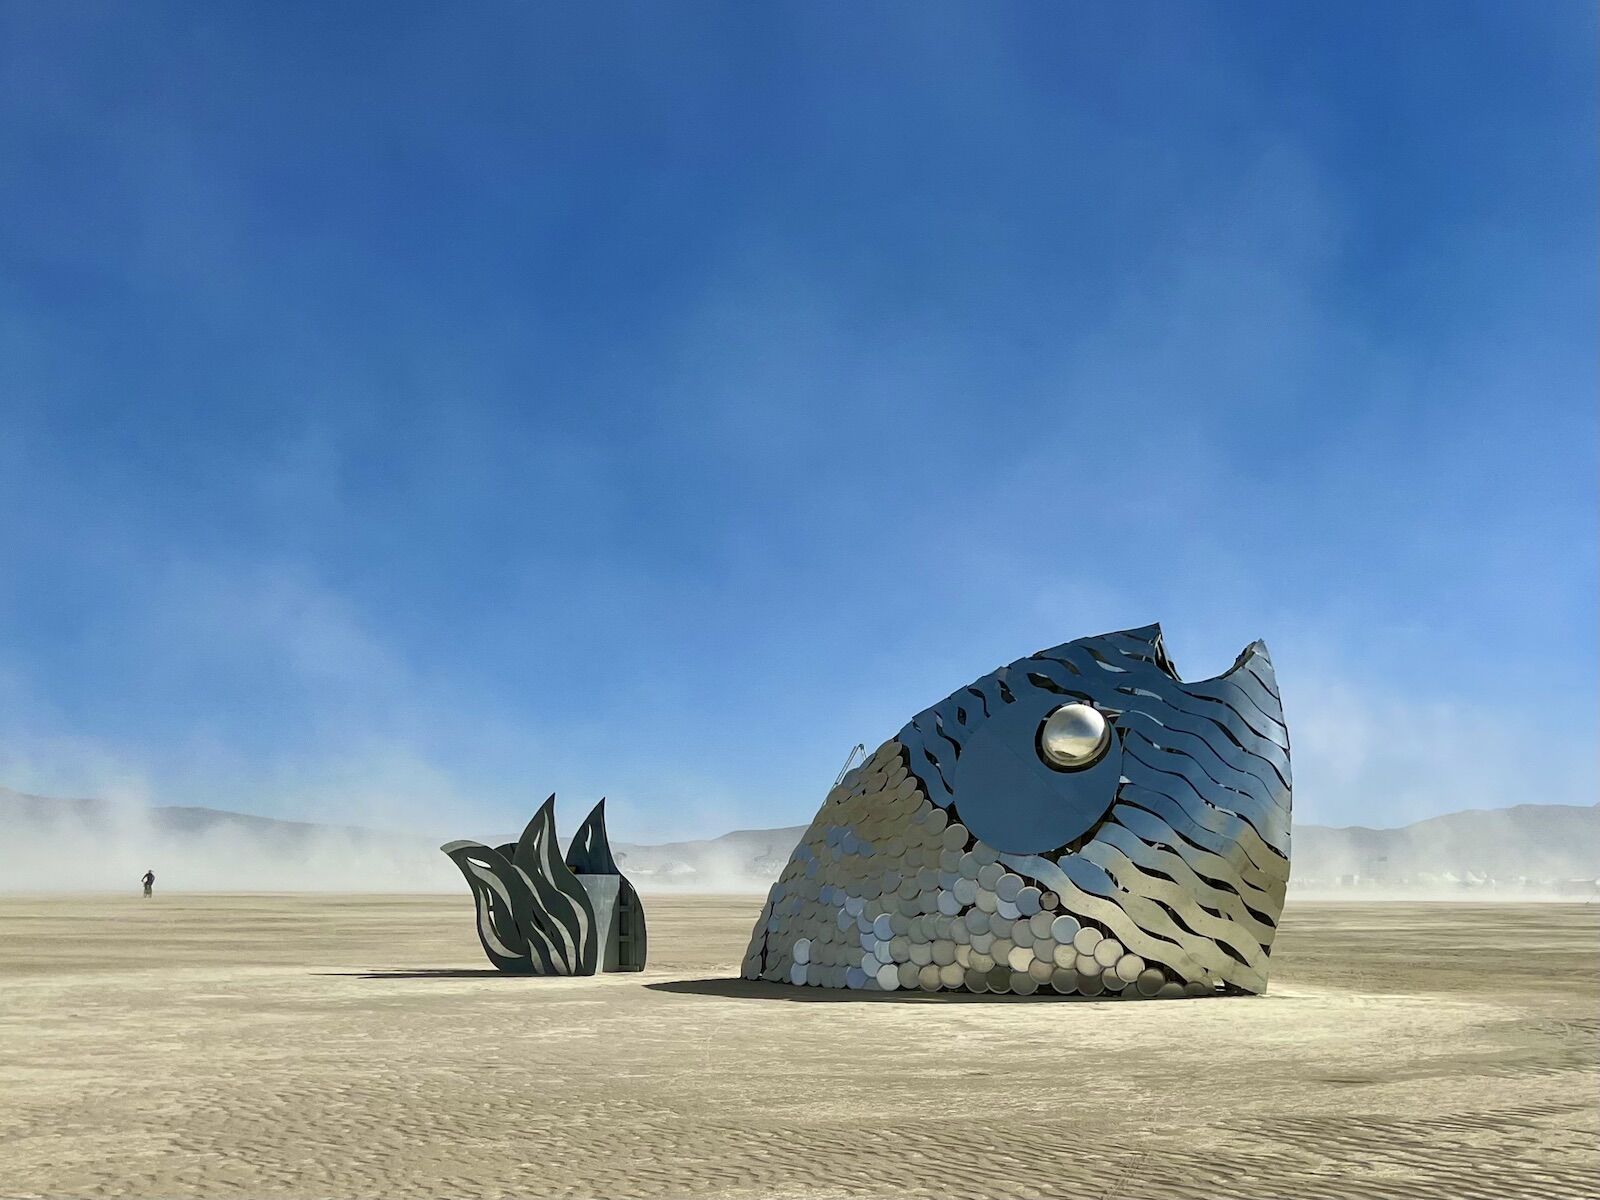 Art from Burning Man 2022: "ATABEY" by artist NiNo